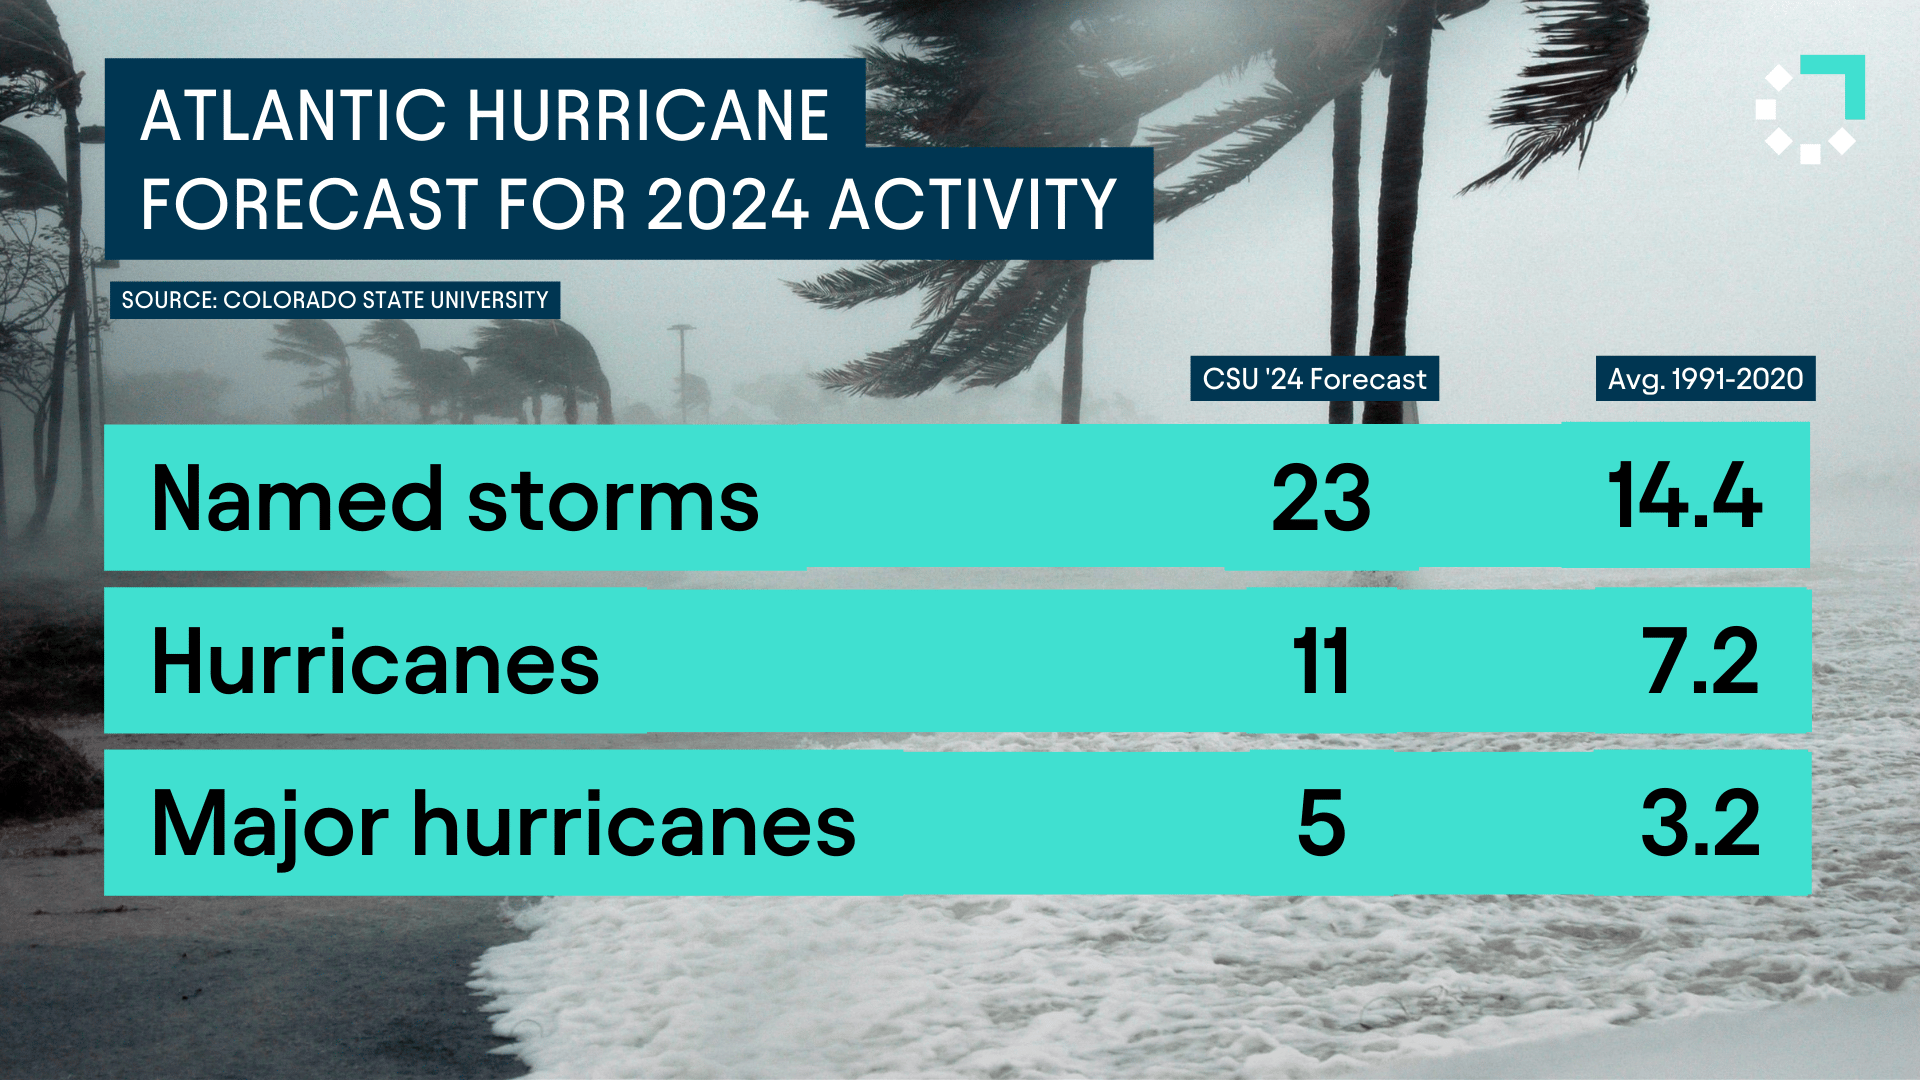 CSU Forecast for 2024 Atlantic Hurricane Season